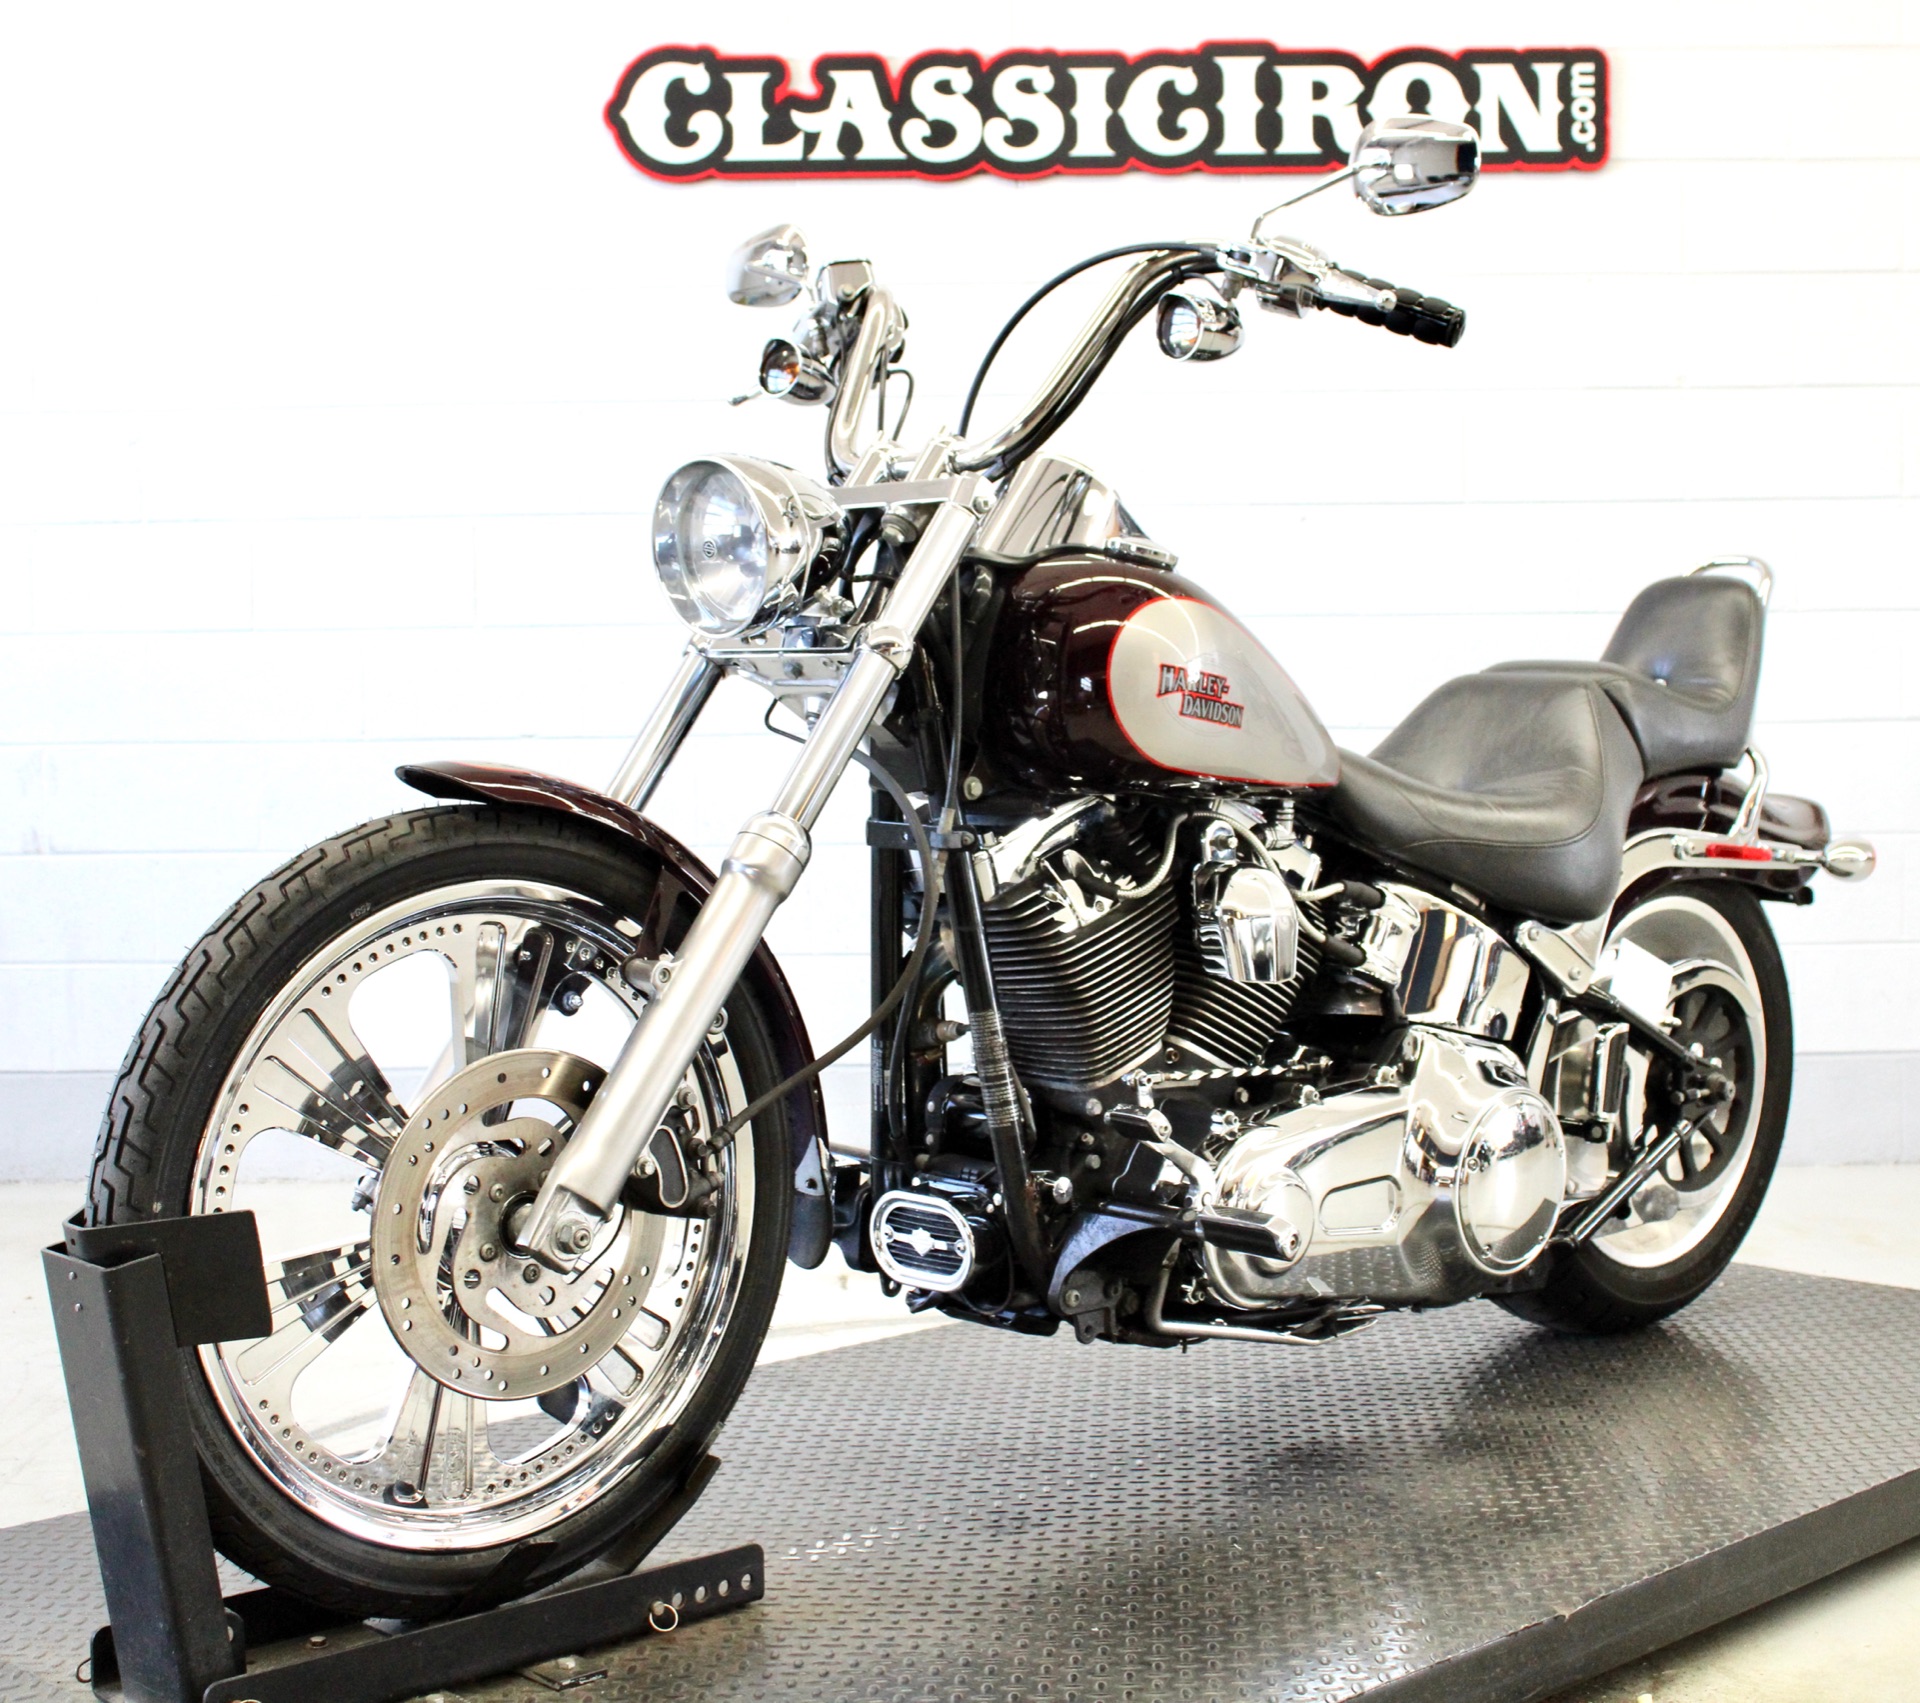 2007 Harley-Davidson Softail® Custom in Fredericksburg, Virginia - Photo 3